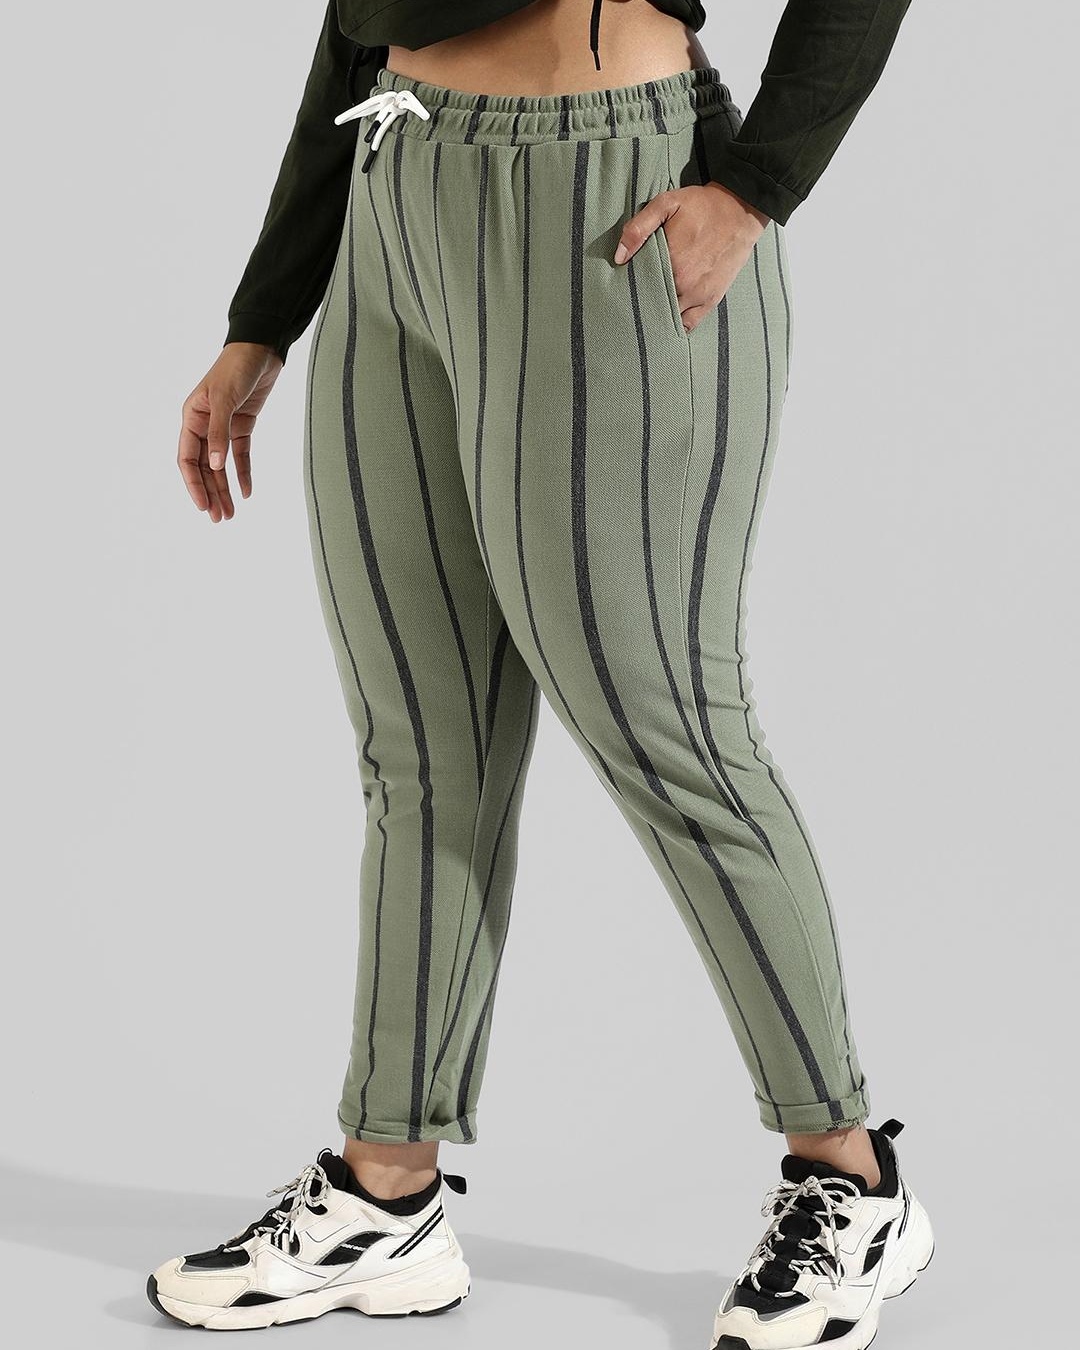 adidas Originals Black Skinny High Rise Track Pants Women's M Zip Ankle  DH4237 | eBay